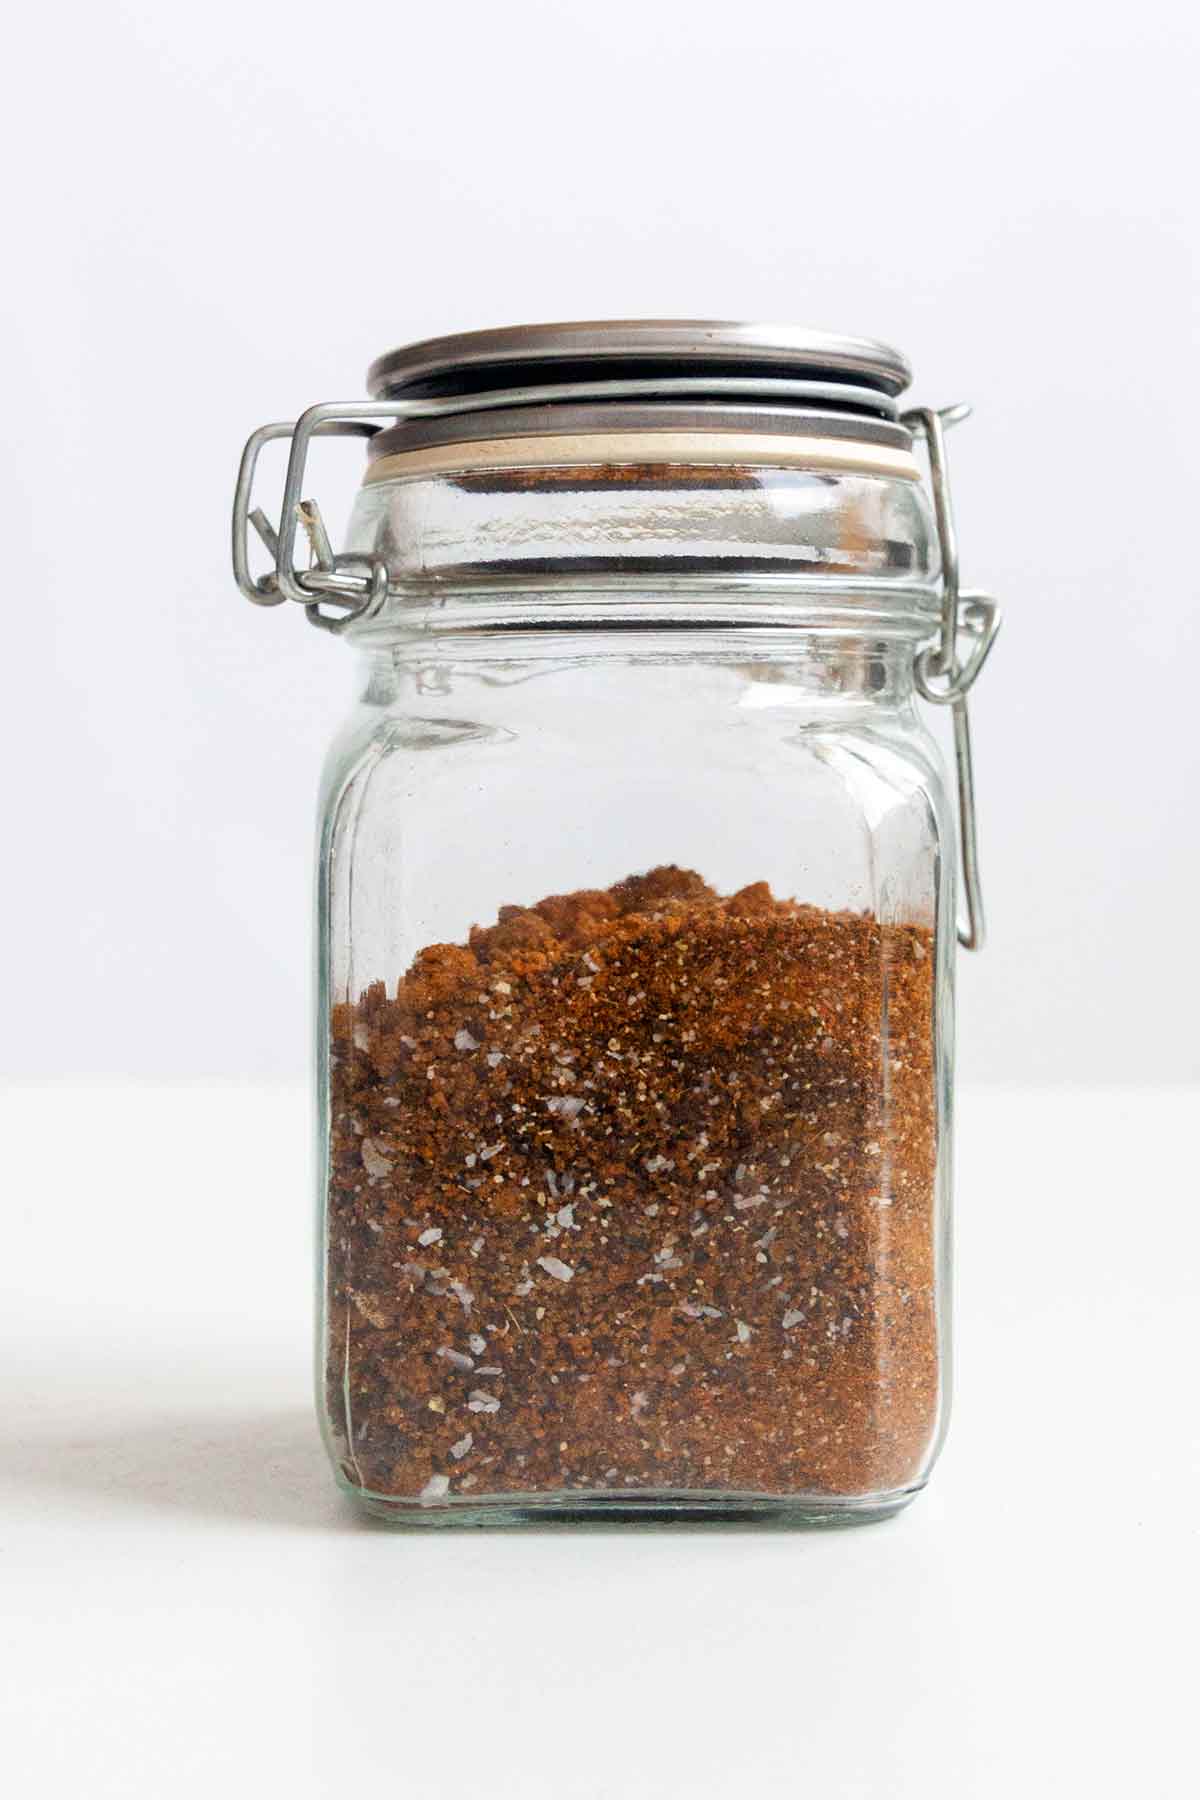 BBQ dry rub seasoning in a glass jar.